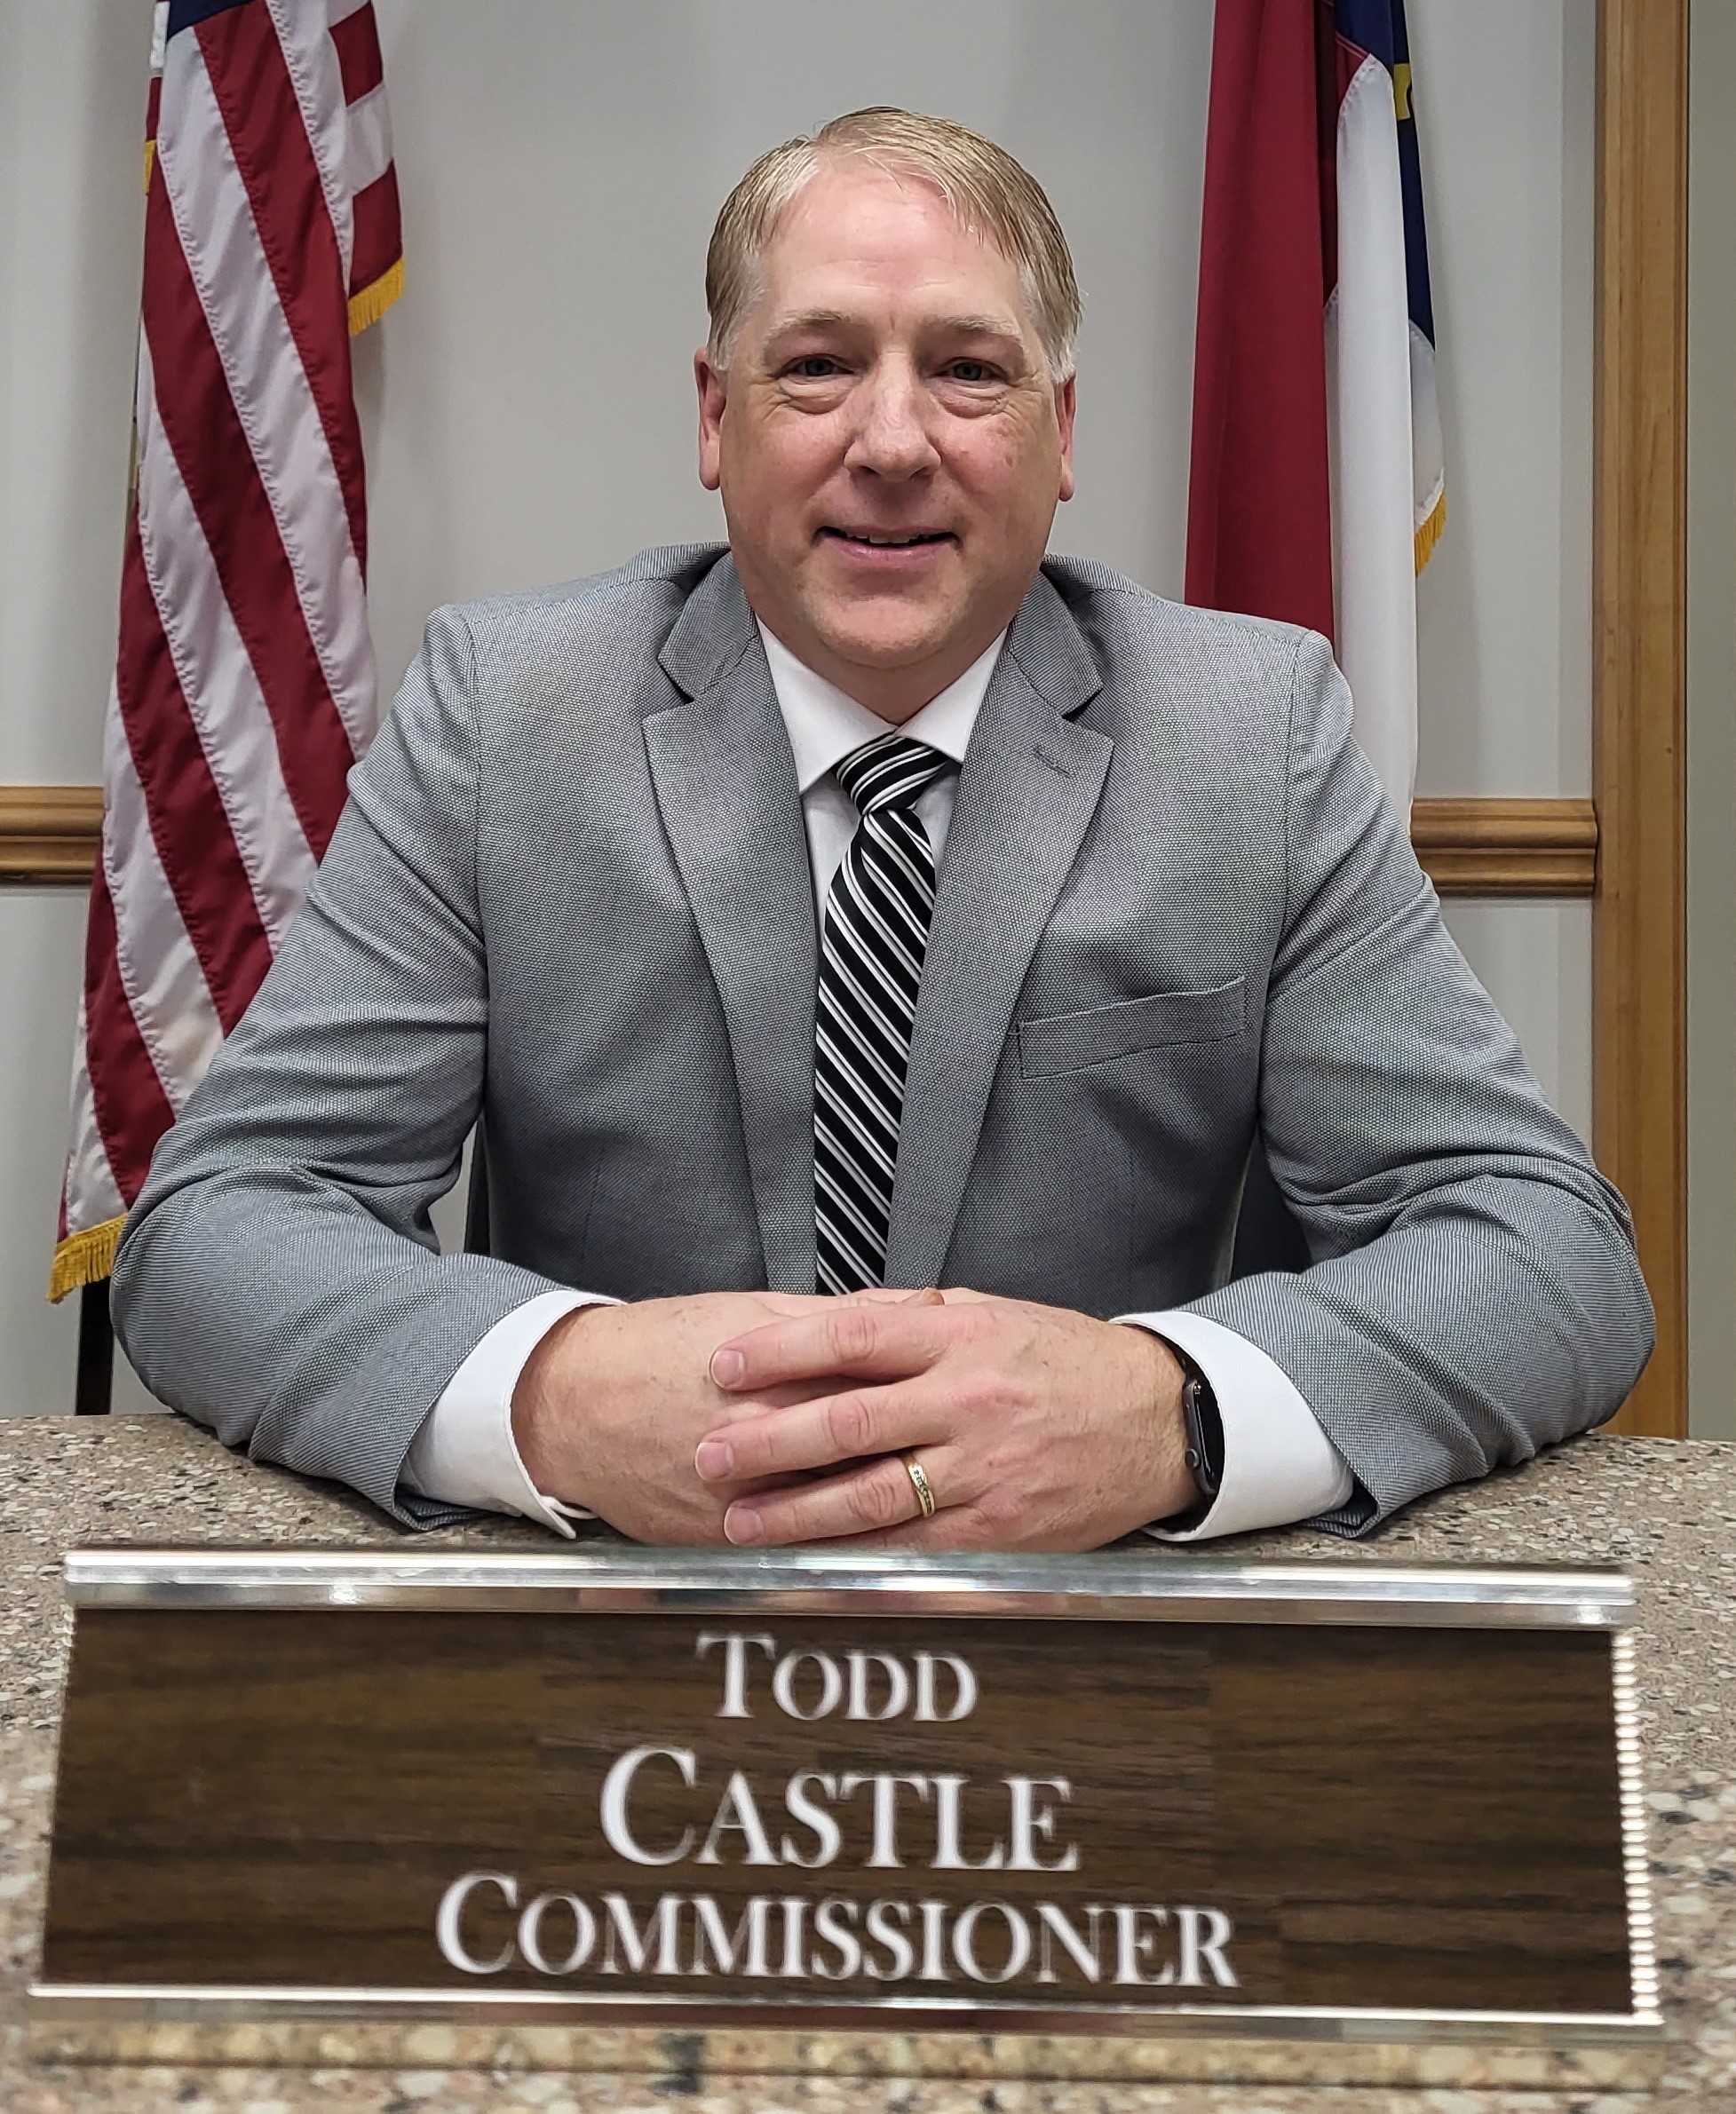 Todd Castle, Term Expires 2026